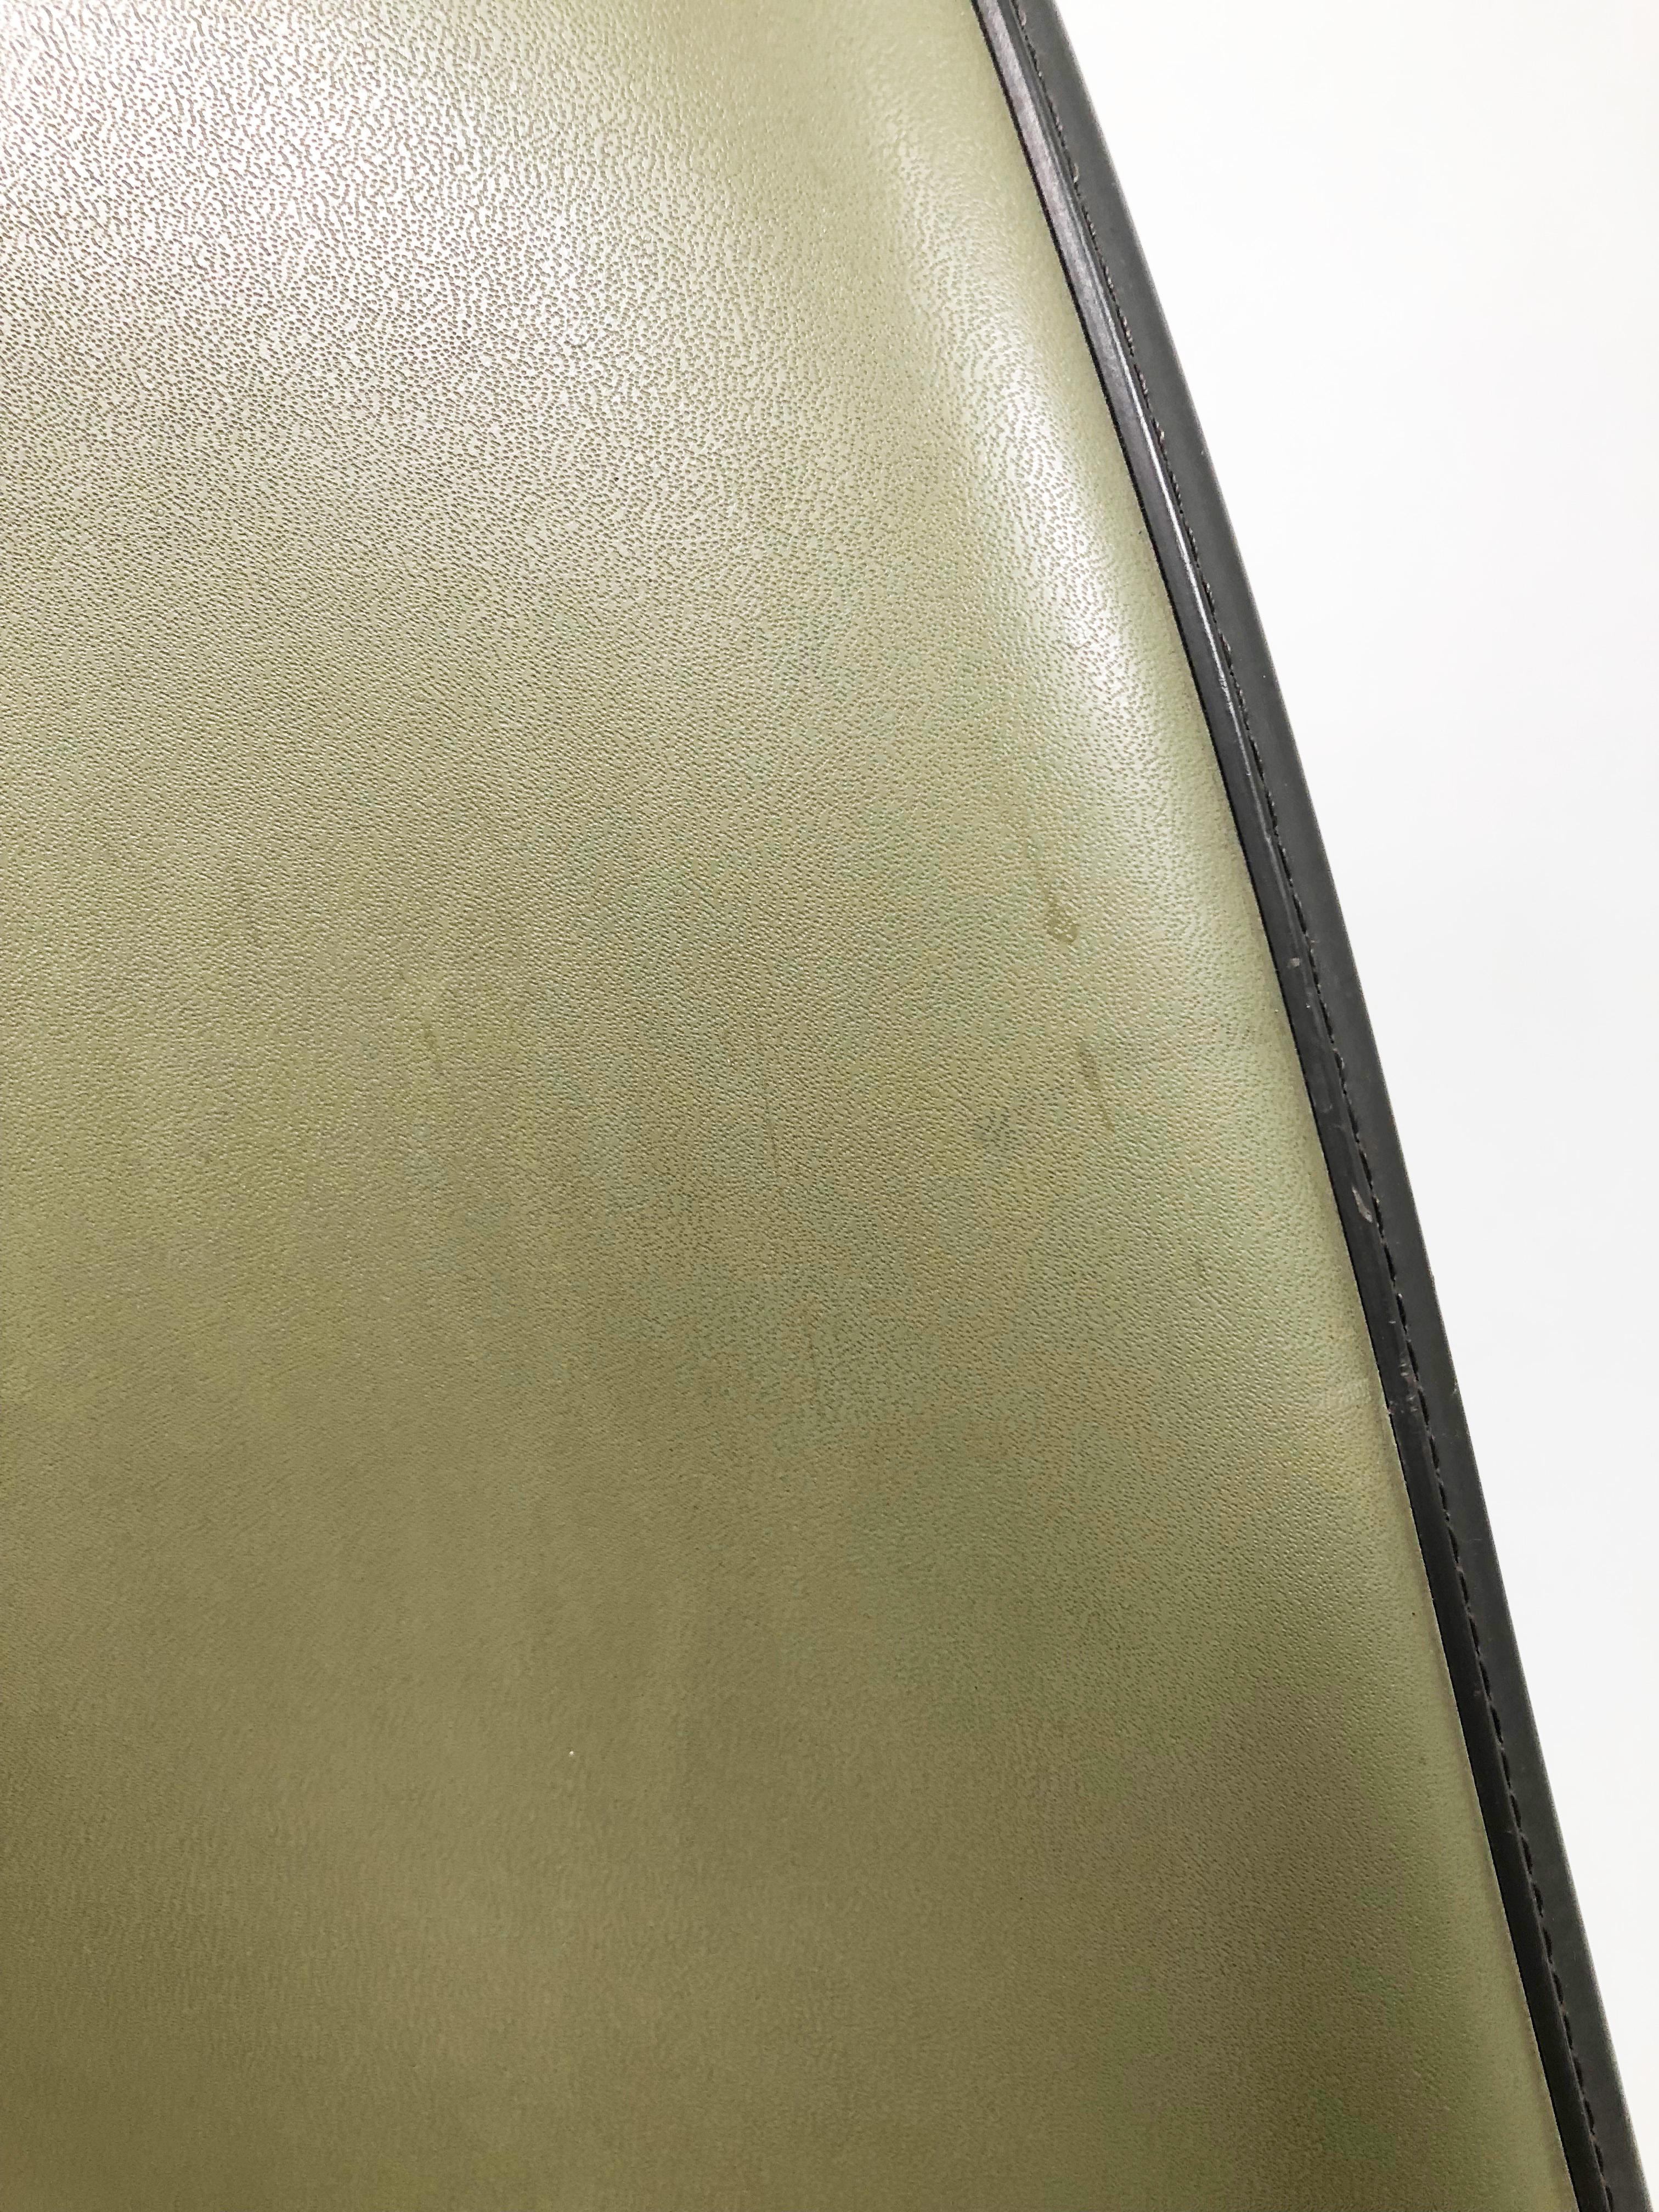 Eames for Herman Miller Fiberglass Shell Chair, Green on Stackable Base 5